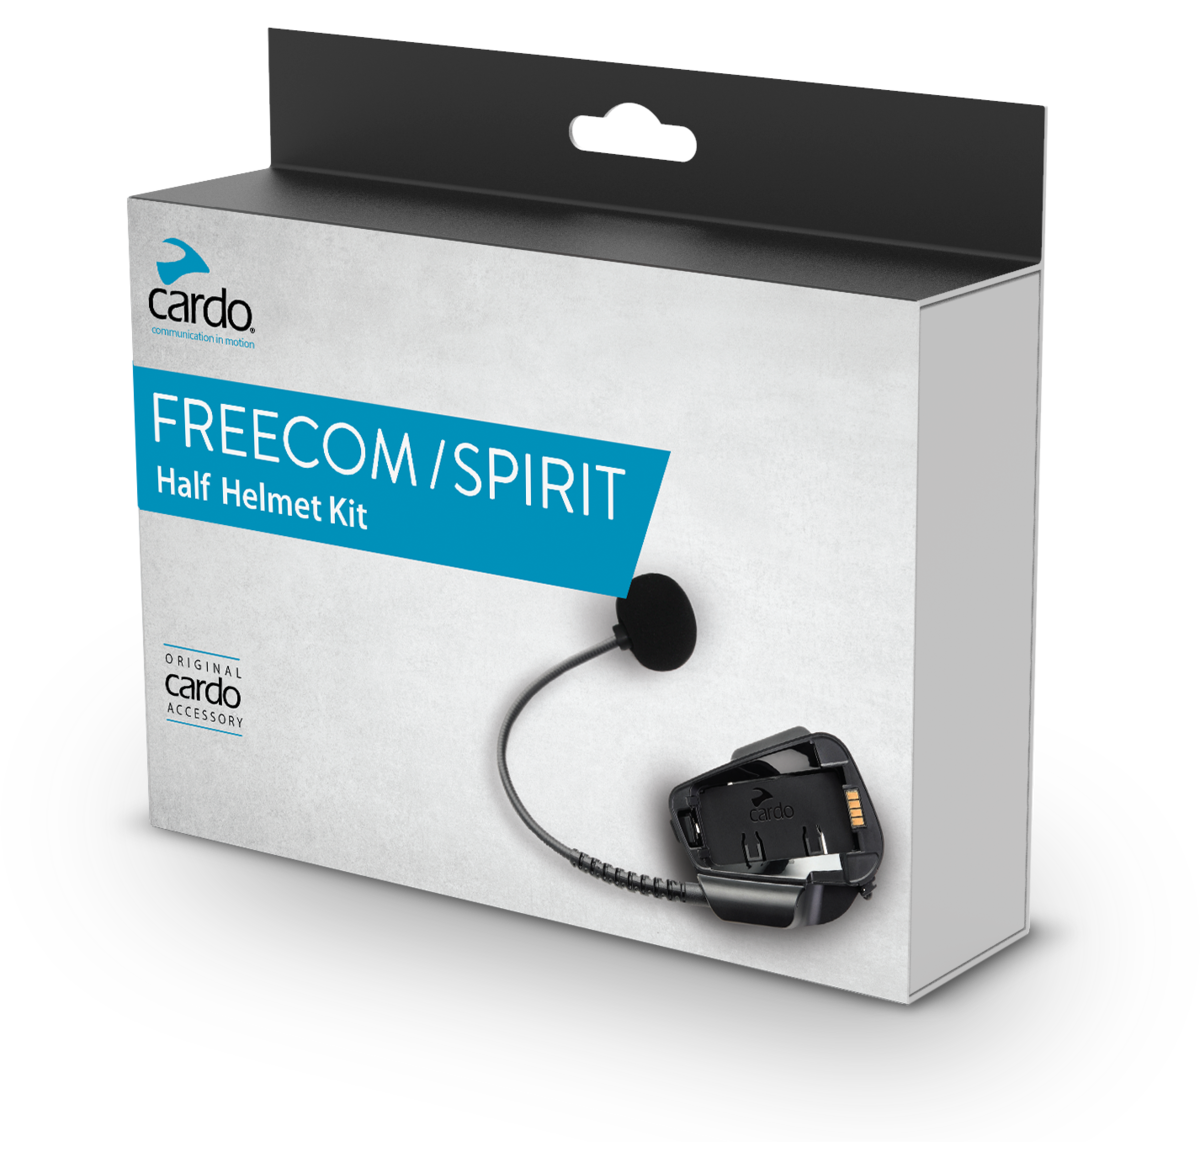 Cardo Freecom/Spirit Half Helmet Kit (ACC00012)